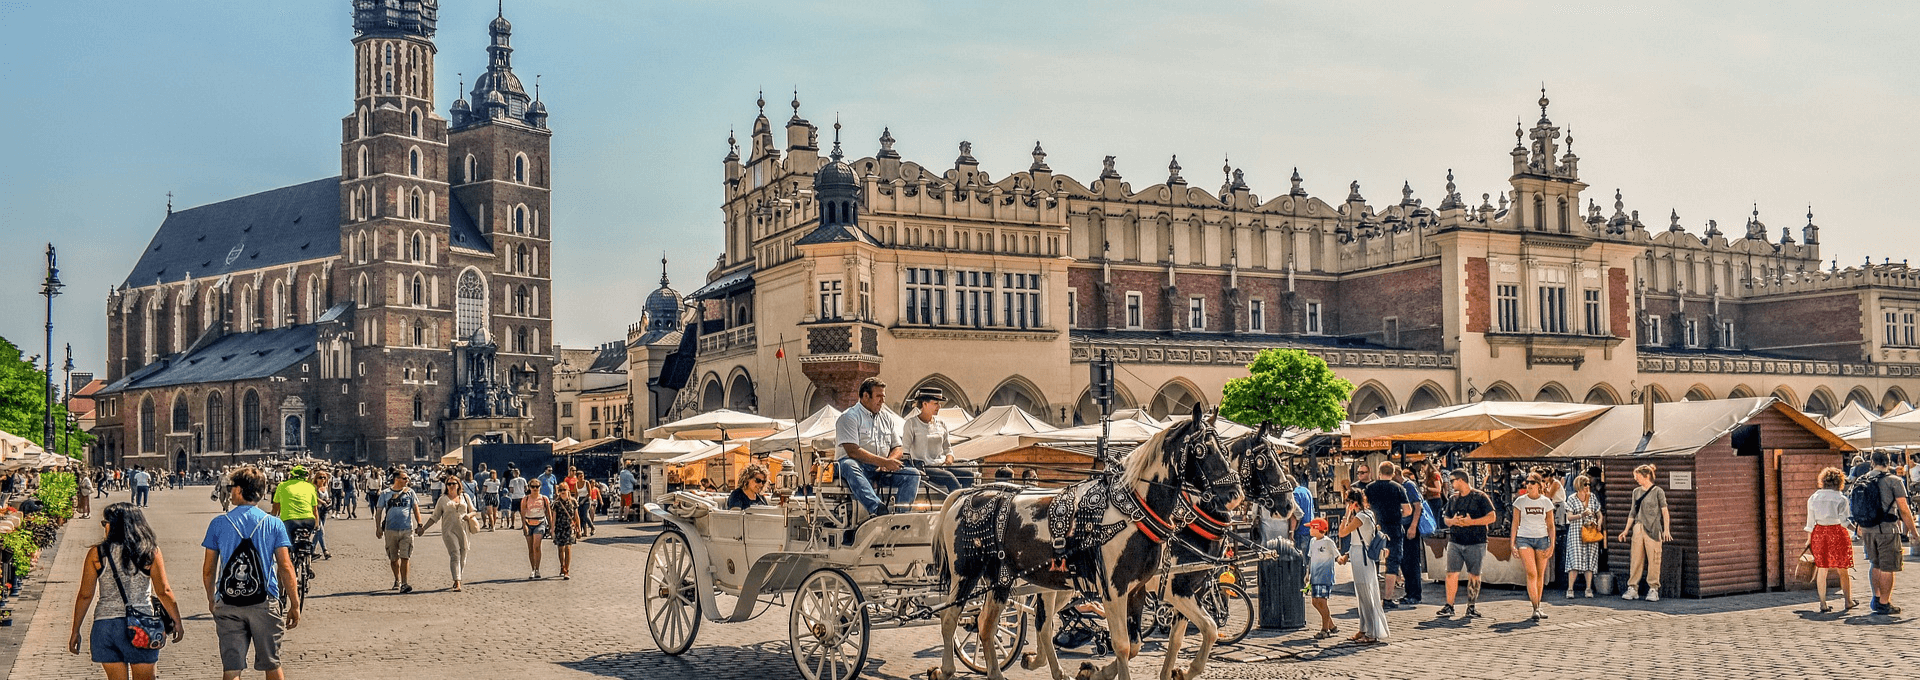 Tours from Krakow